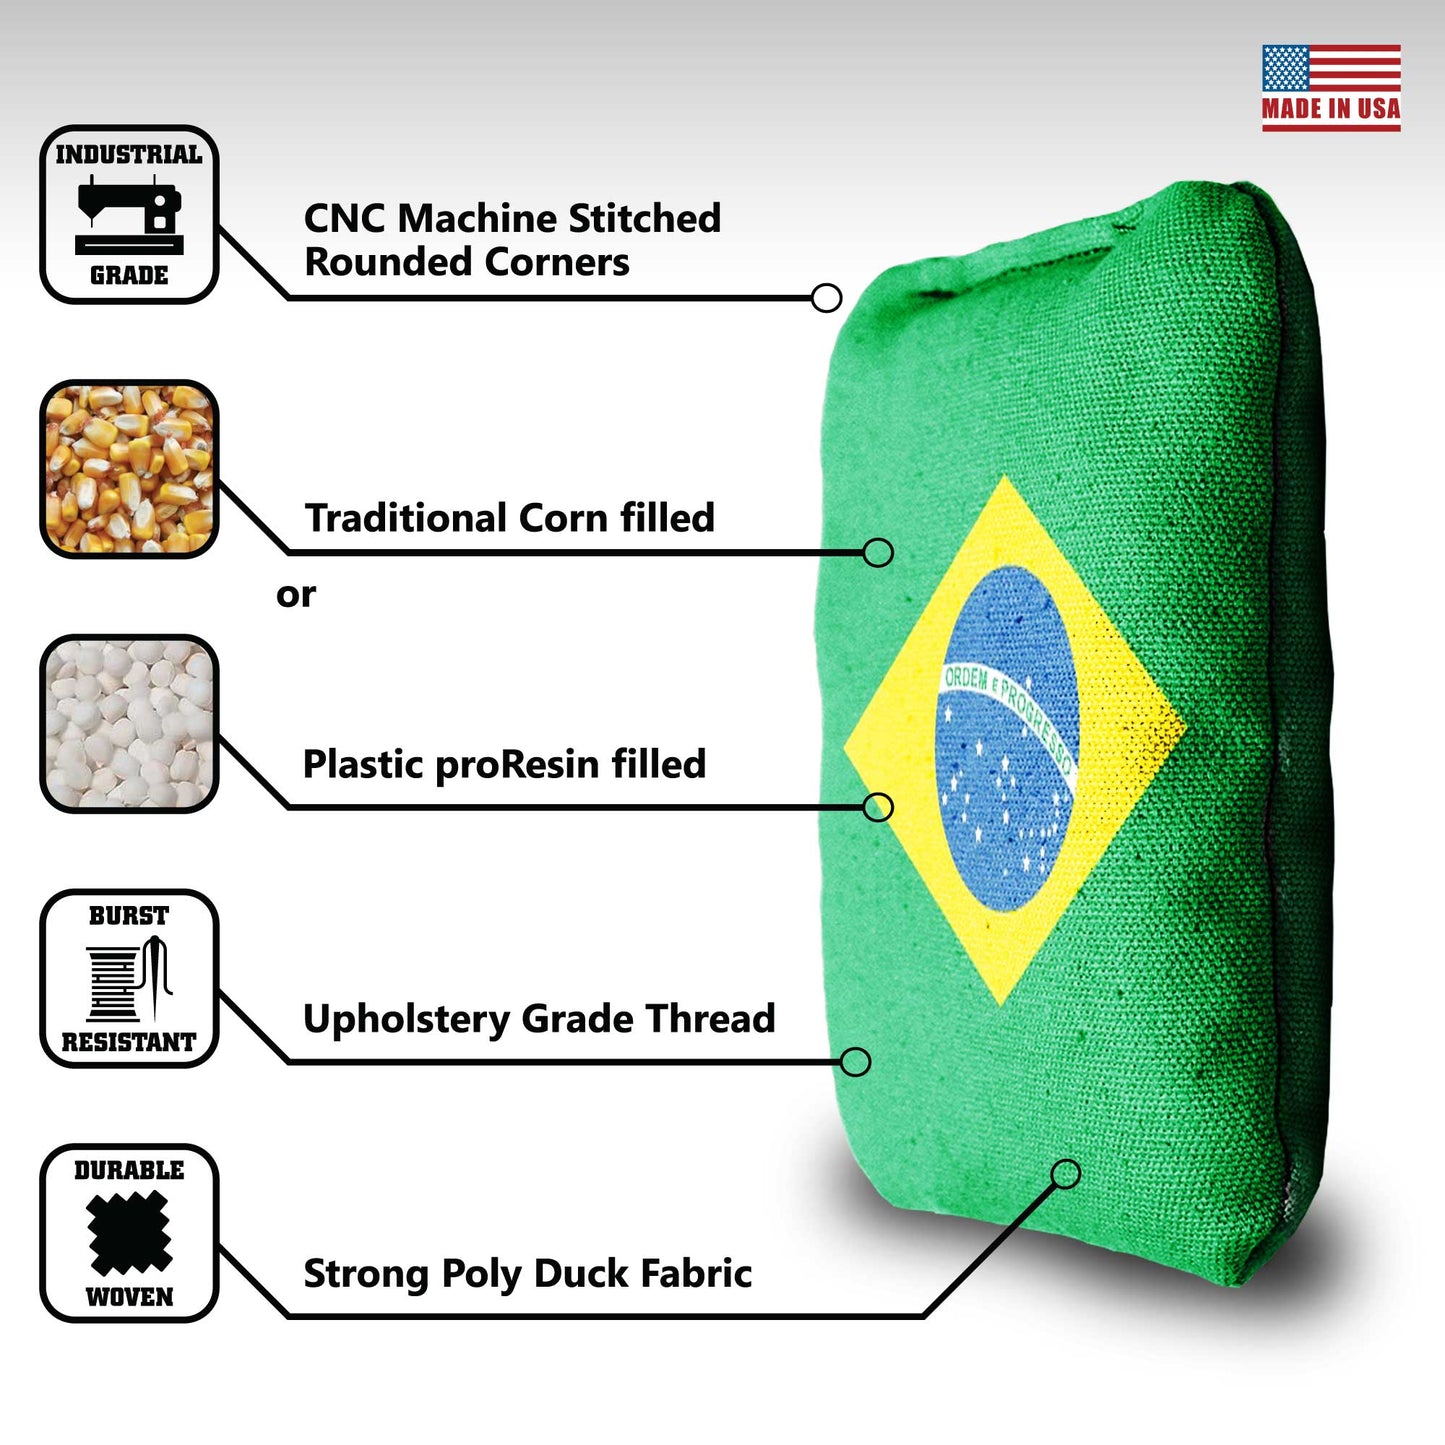 The Brazilians - 8 Cornhole Bags